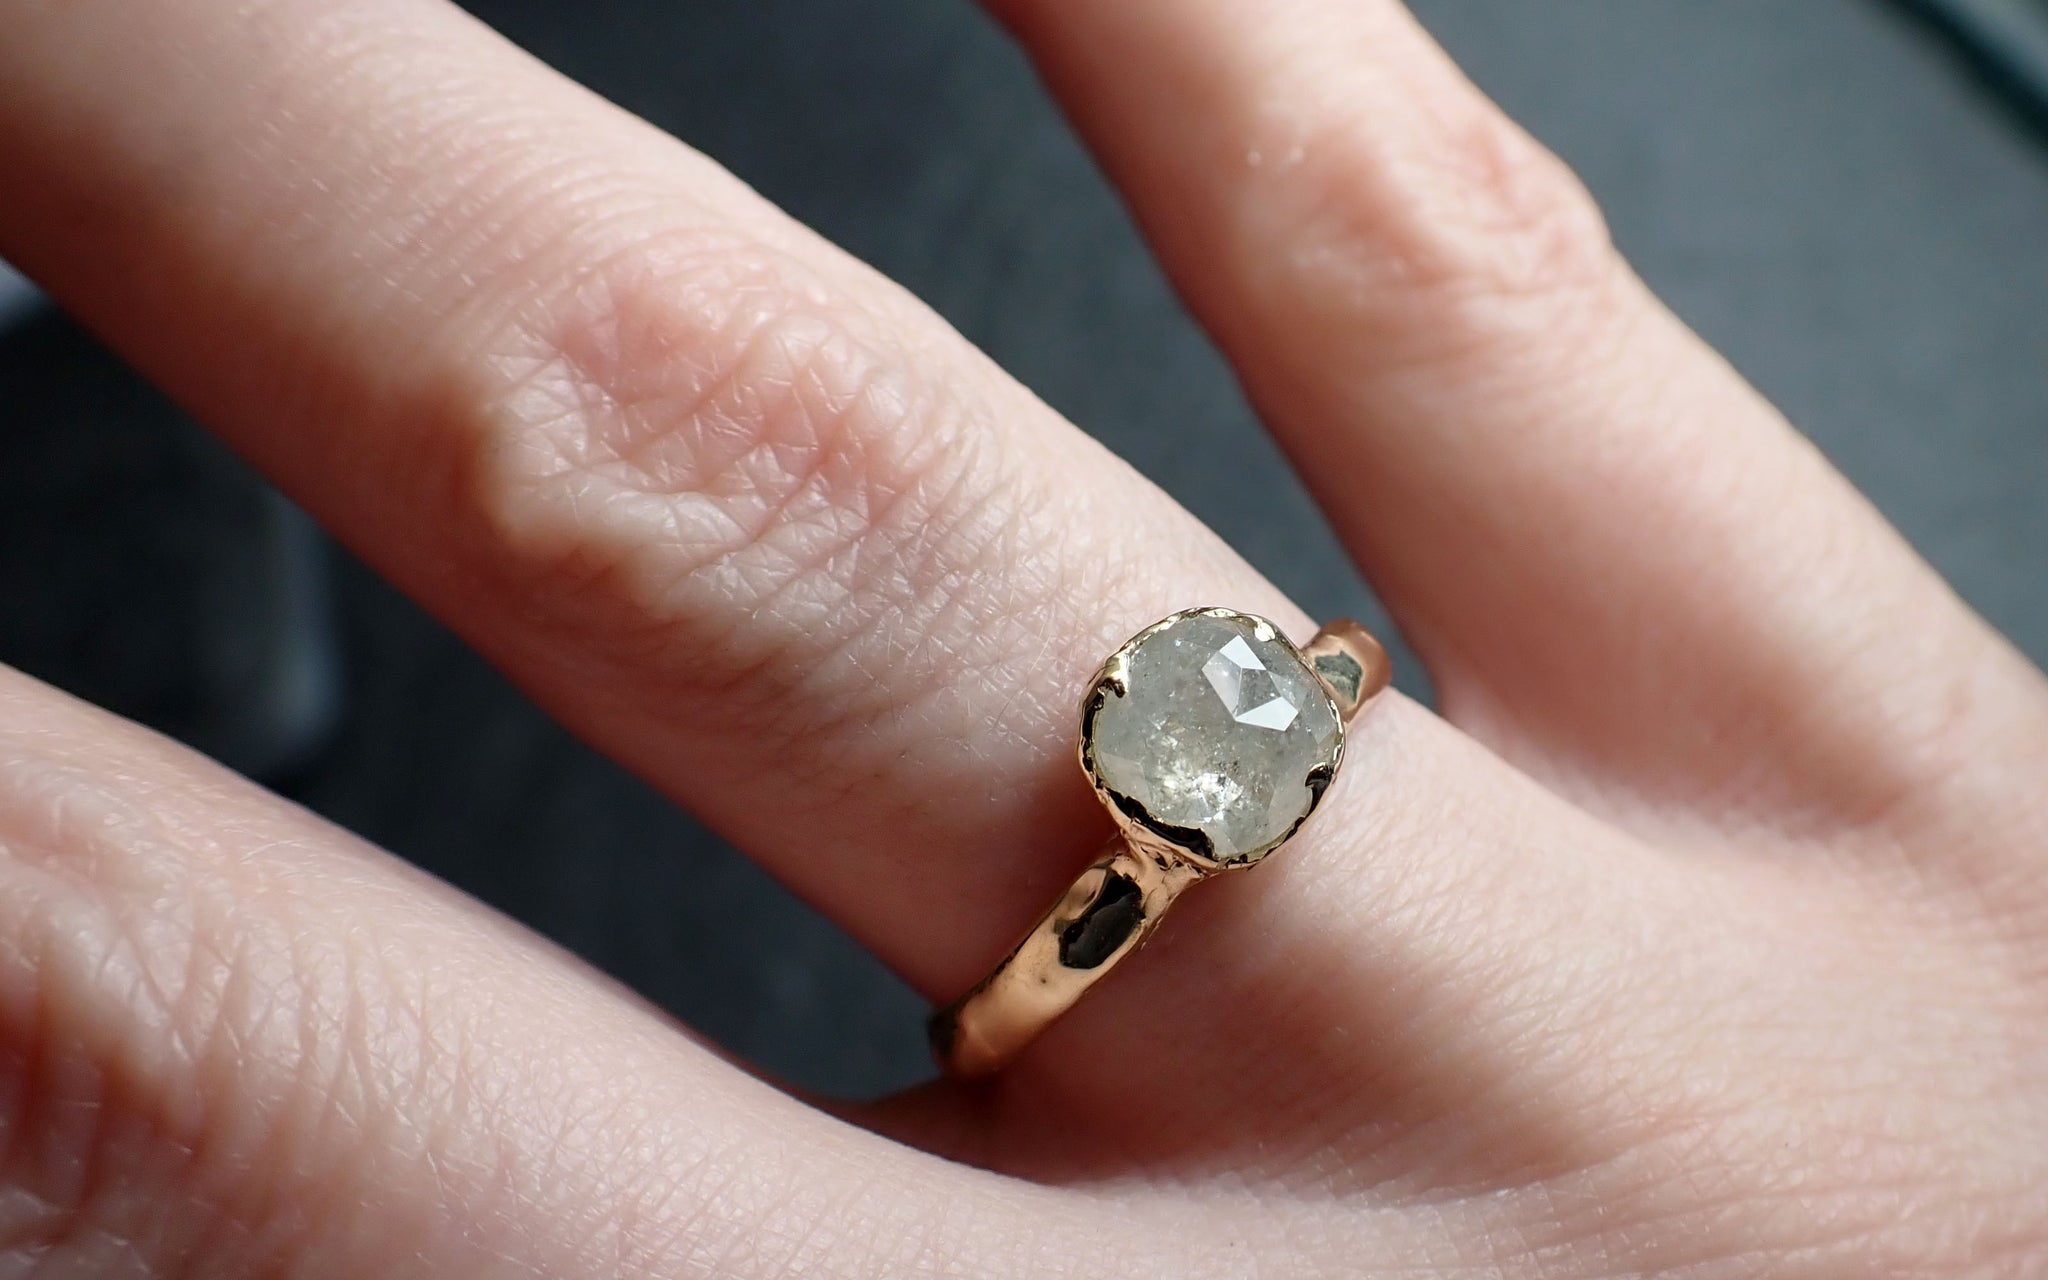 Fancy cut white Diamond Solitaire Engagement 18k yellow Gold Wedding Ring byAngeline 2806